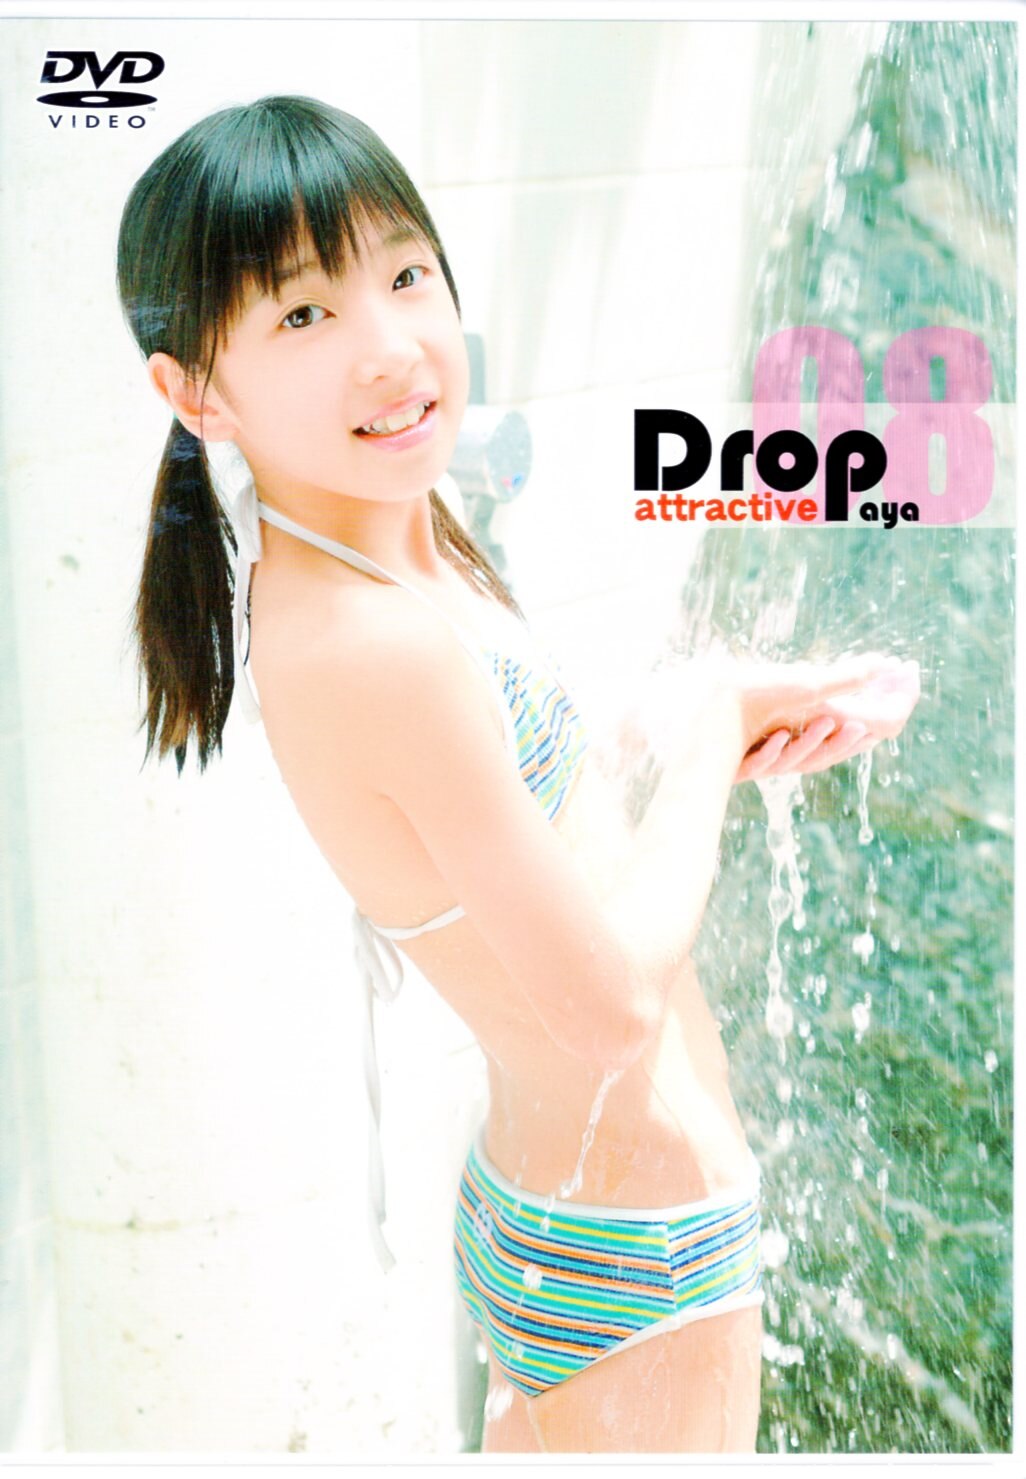 Drop DVD aya Drop attractive 08 | MANDARAKE 在线商店